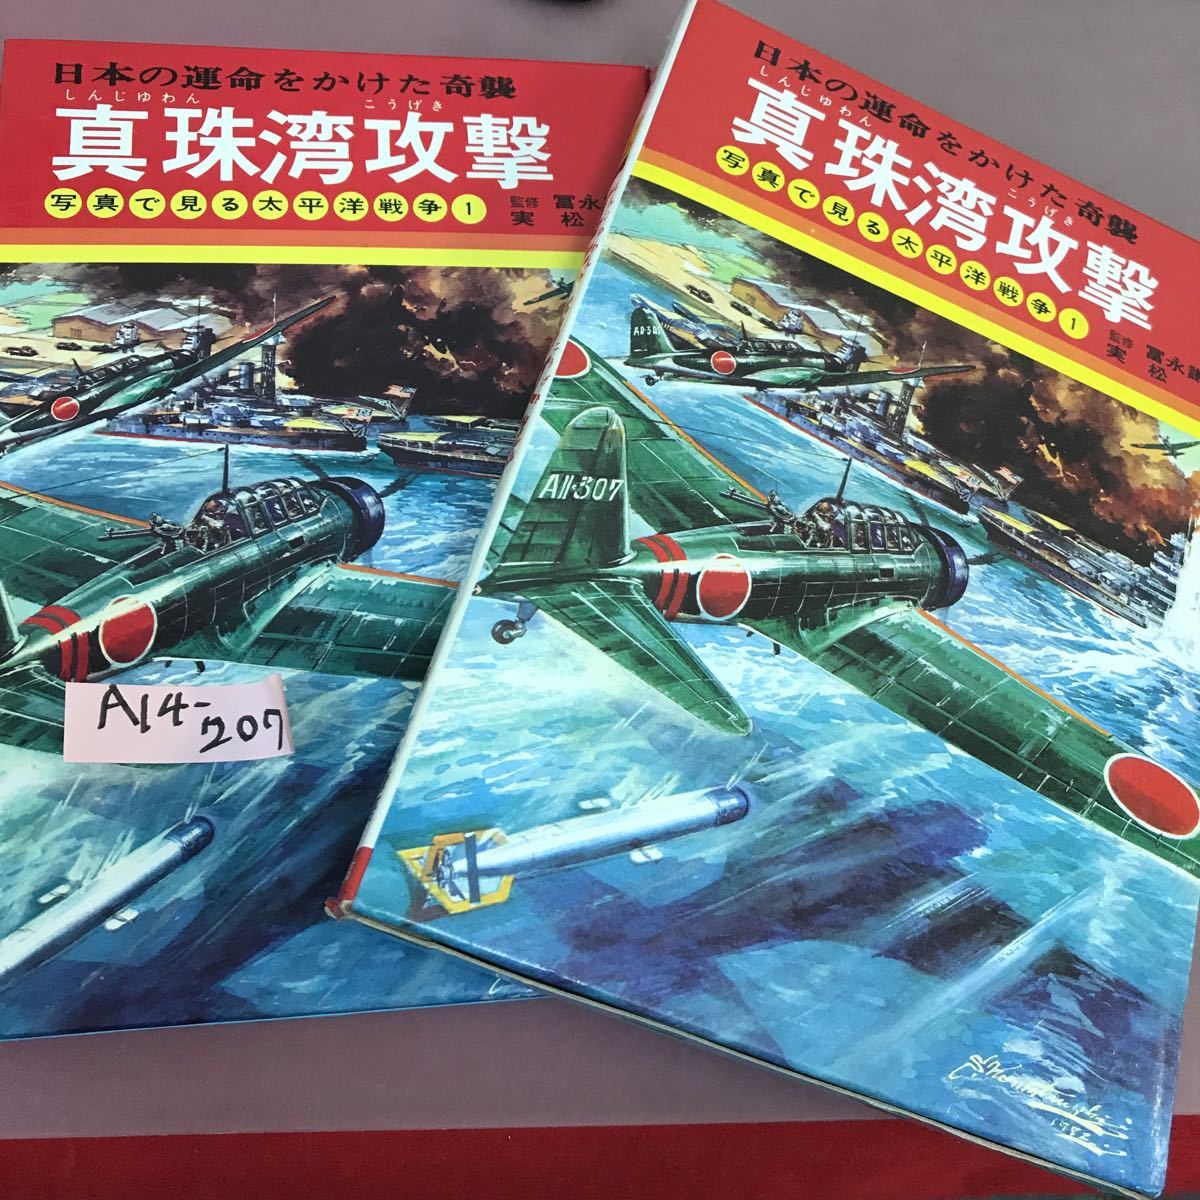 A14-207 写真で見る太平洋戦争 1 真珠湾攻撃 日本の運命をかけた奇襲 秋田書店